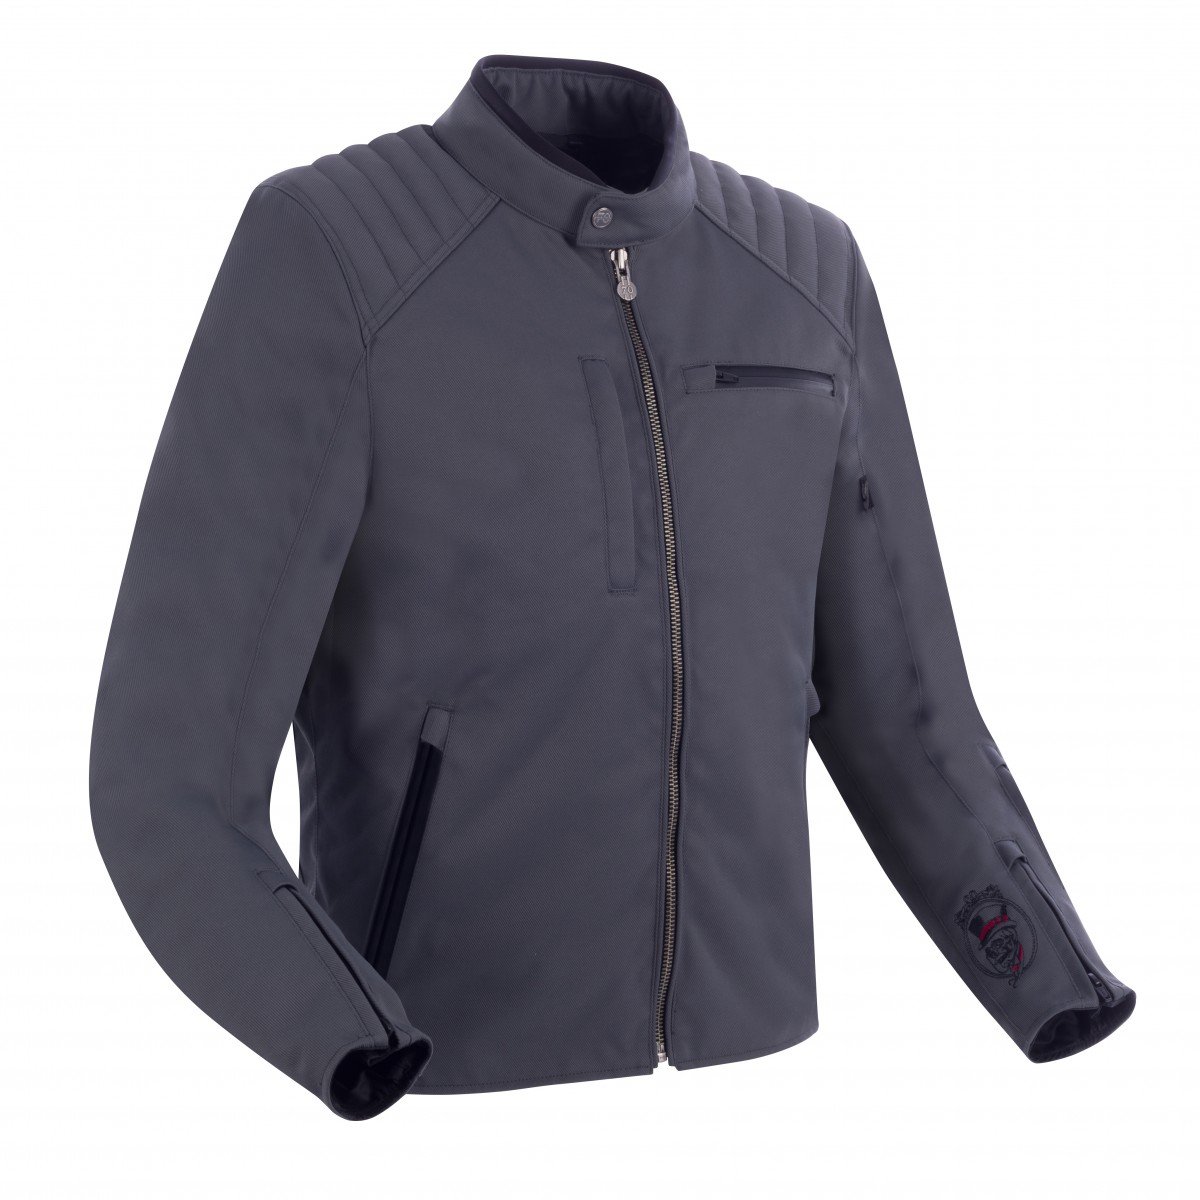 Image of Segura Eternal Jacket Gray Size M ID 3660815168639